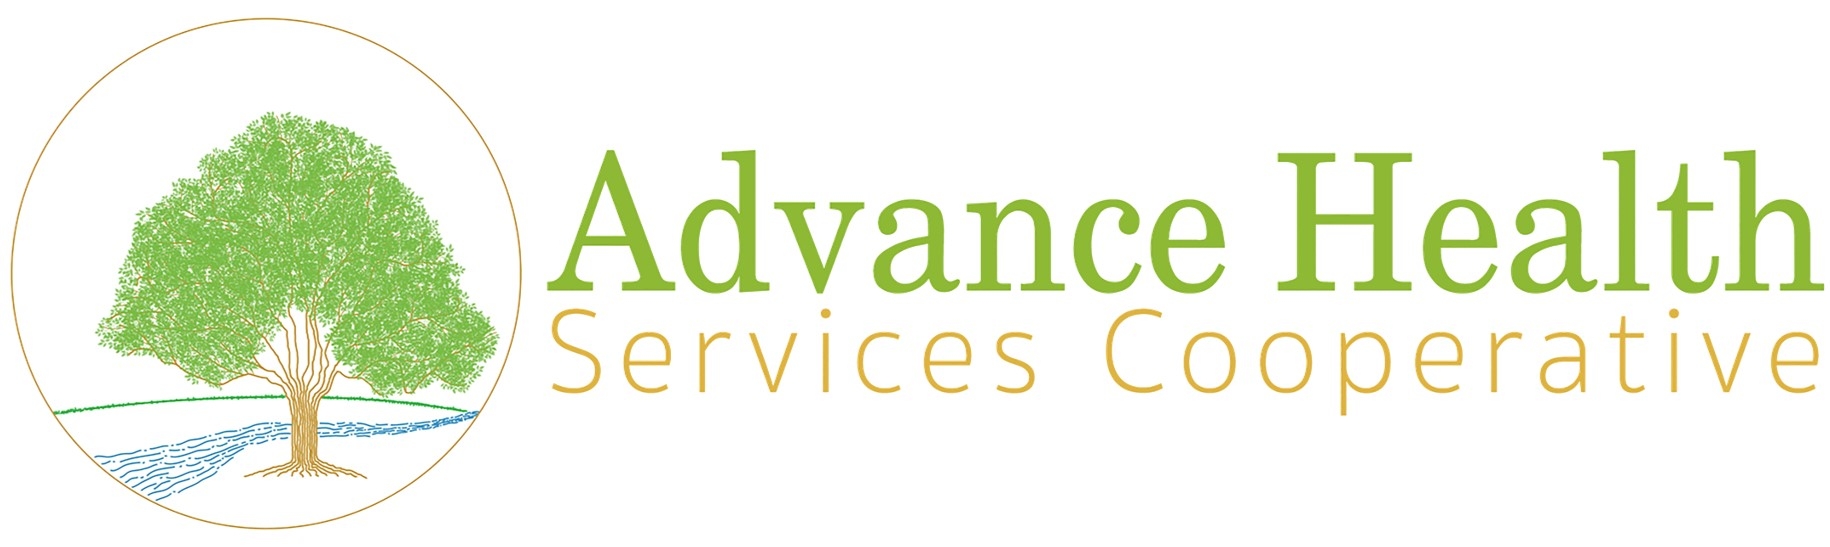 Advance Health Services Cooperative job hiring image